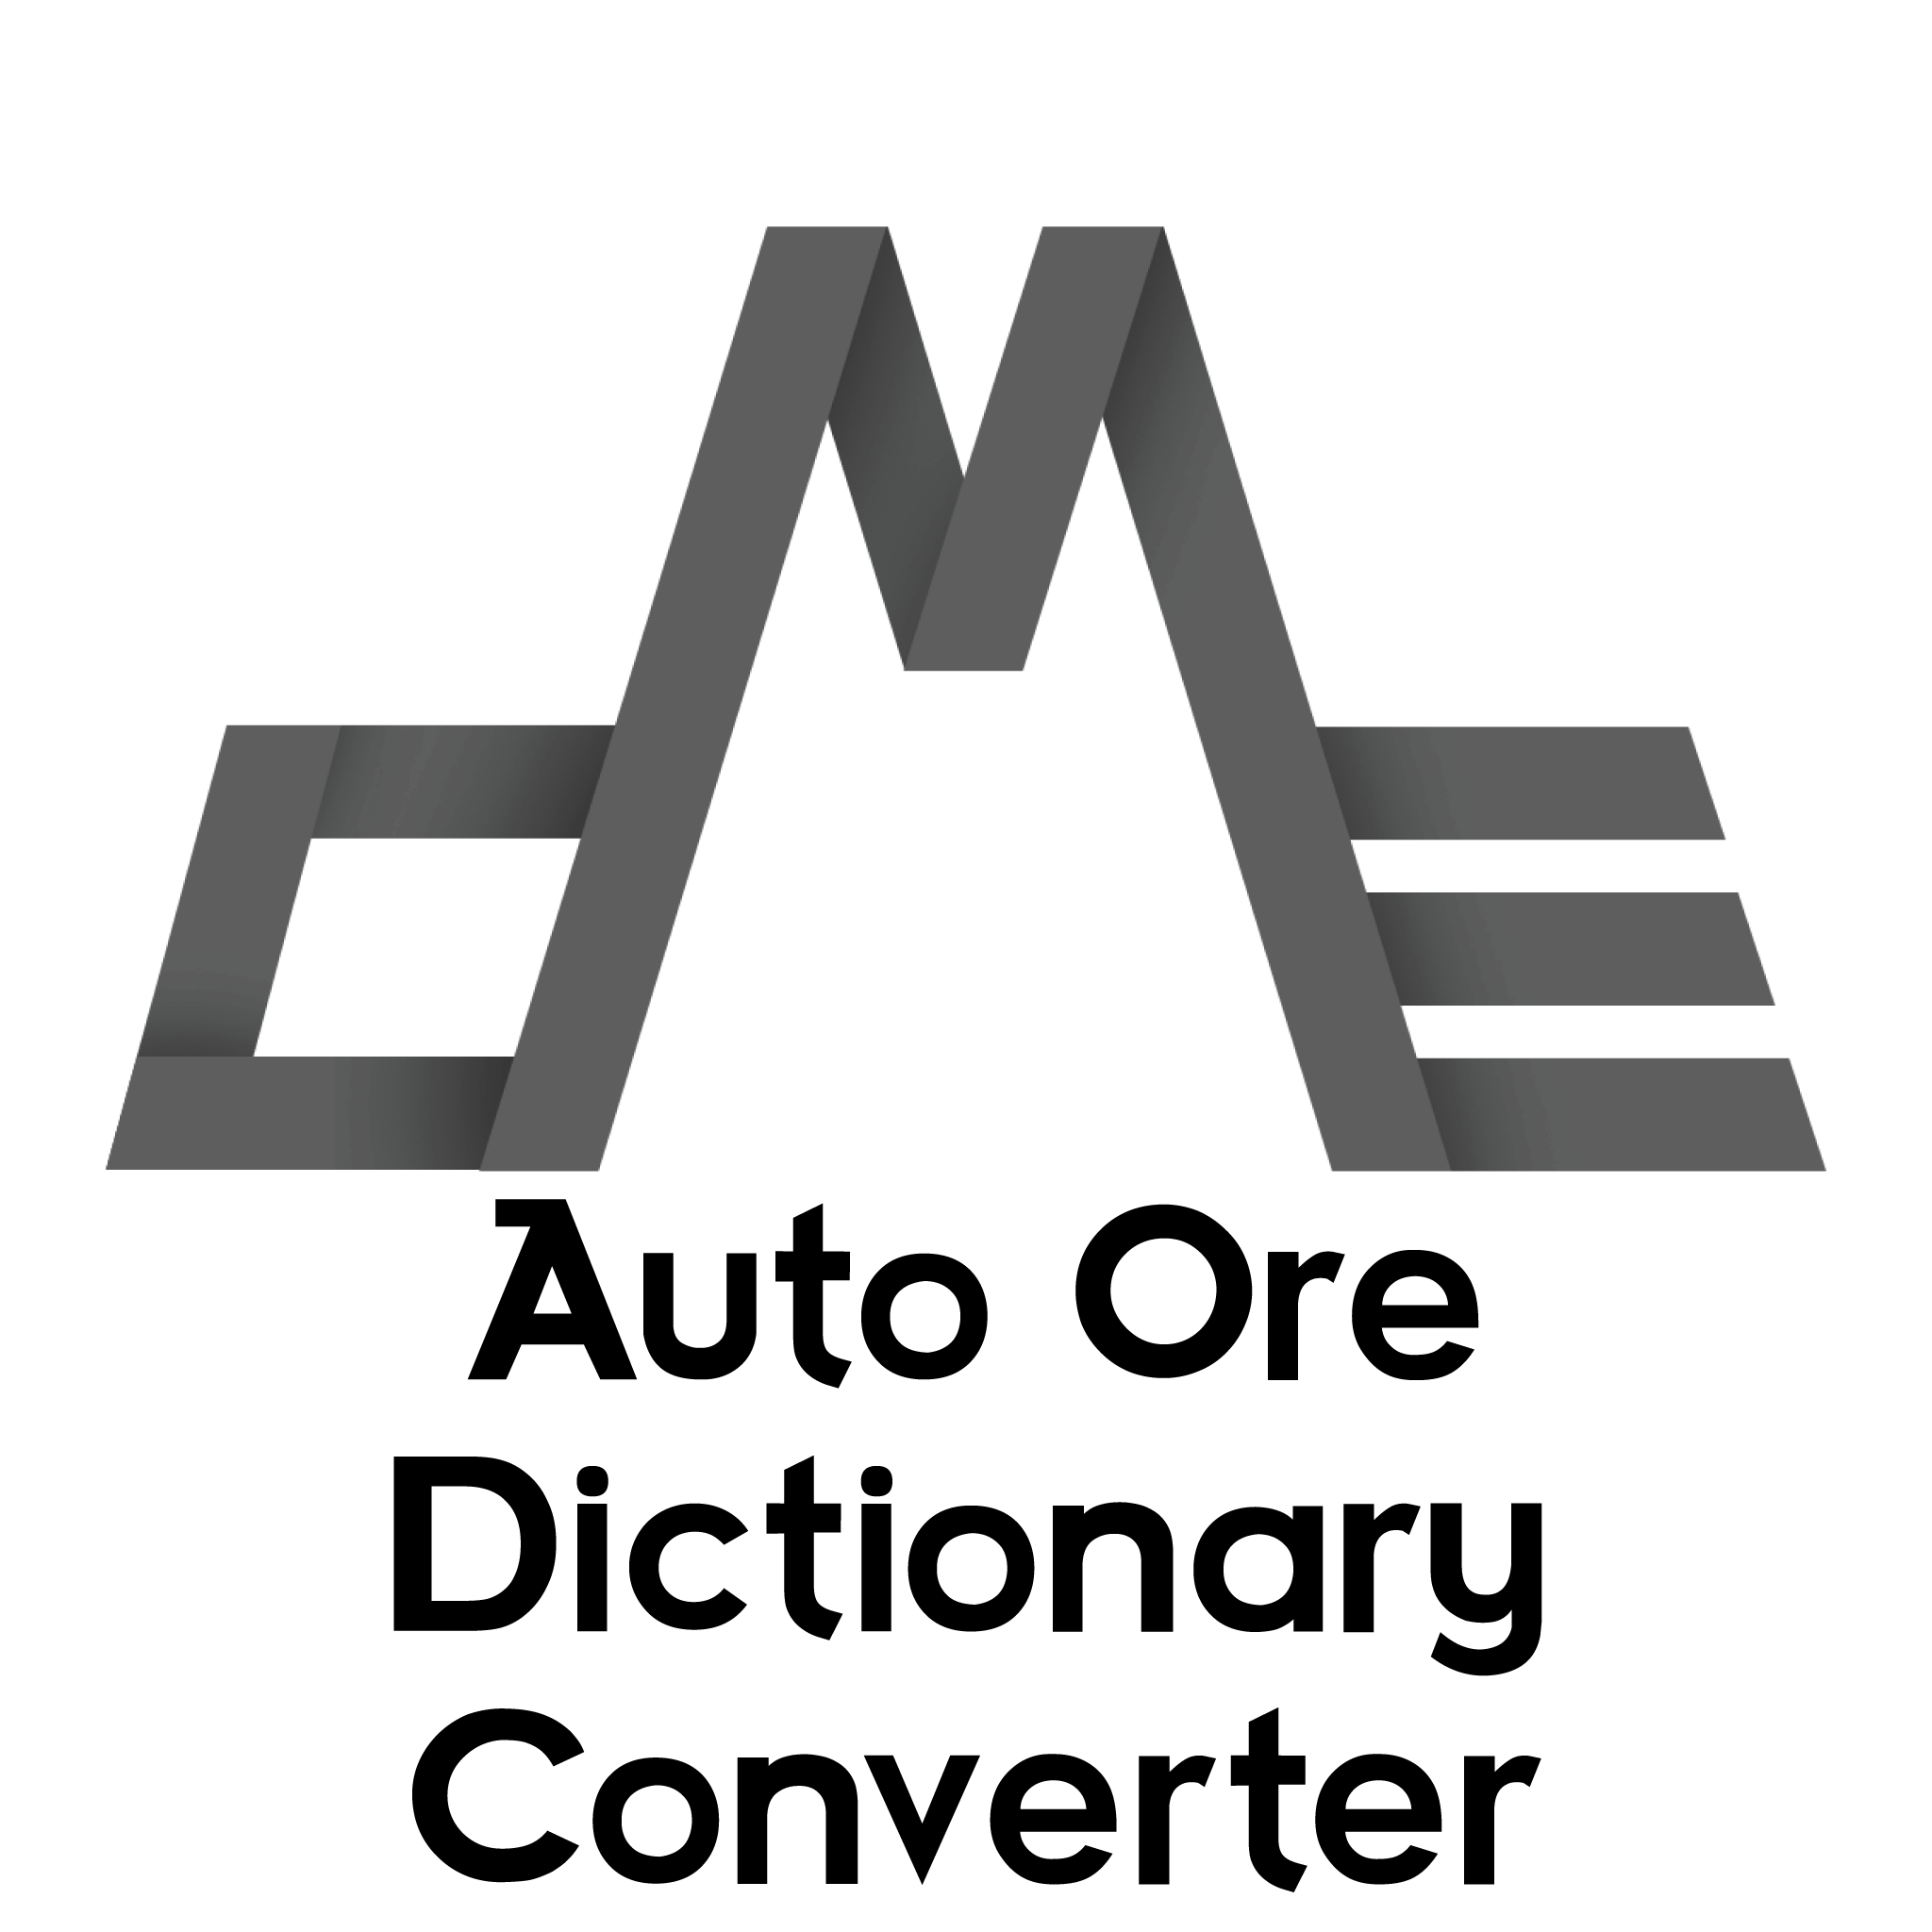 Auto Ore Dictionary Converter